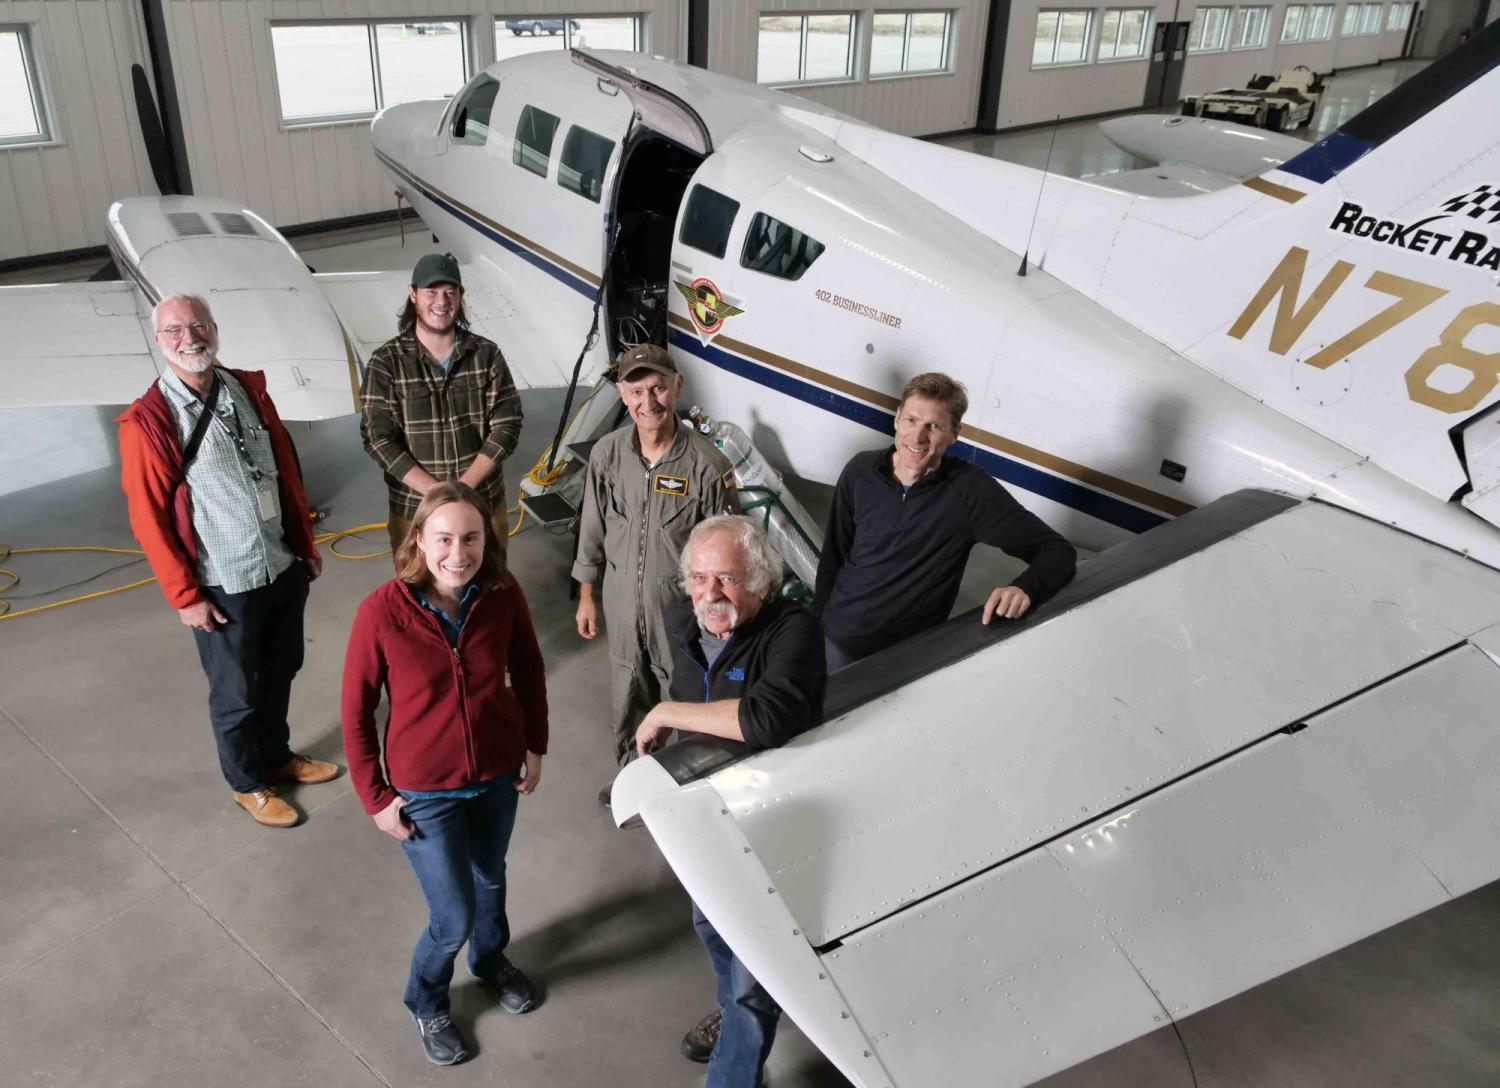 Members of INSTAAR, the University of Maryland and TOFWERK group photo in a hangar